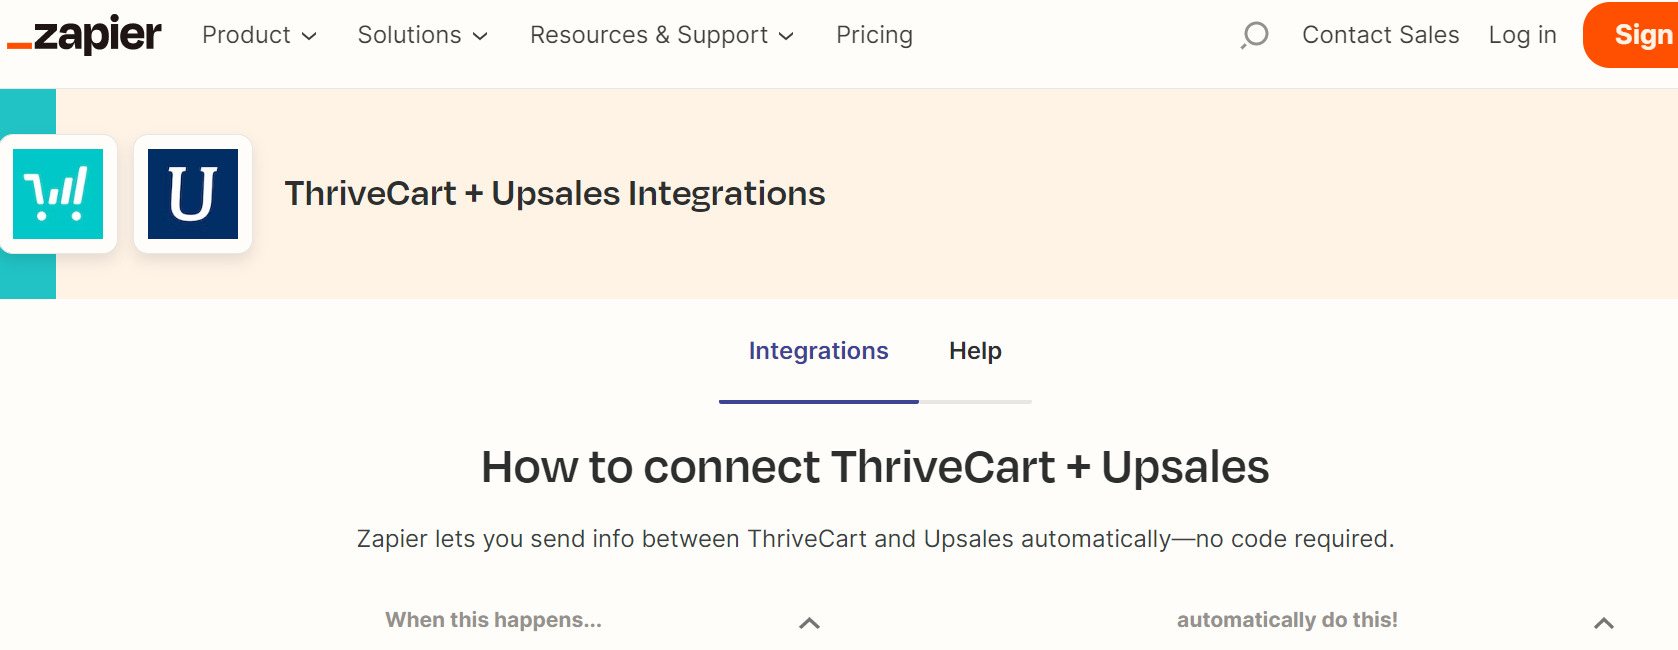 Zapier-ThriveCart plus Upsales Intergrations